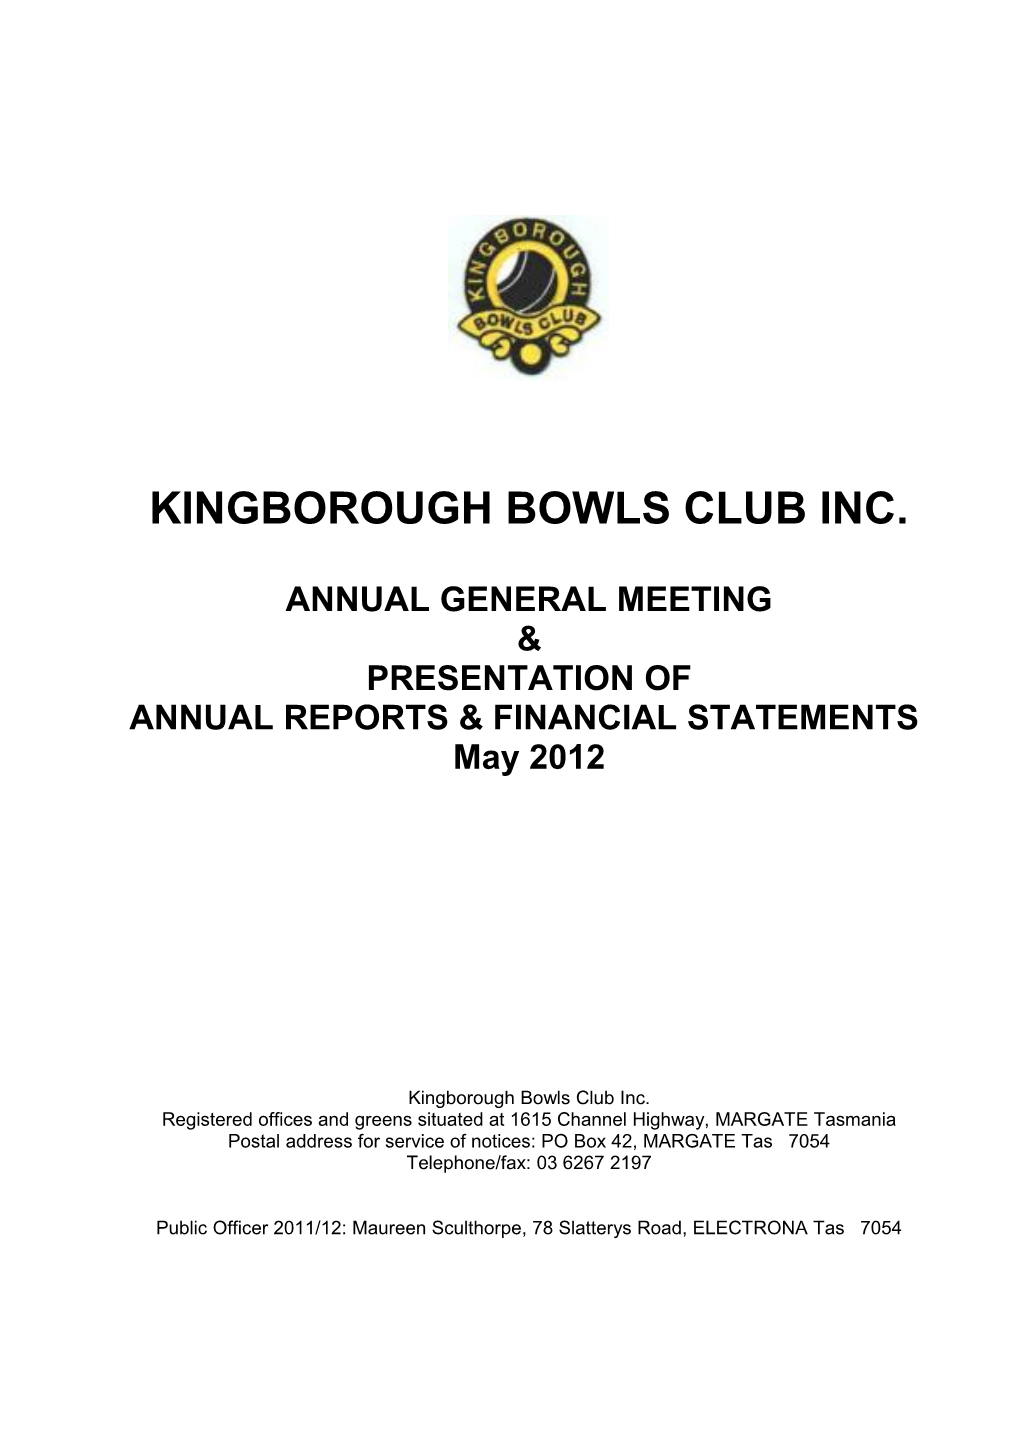 Kingborough Bowls Club Inc Annual Report